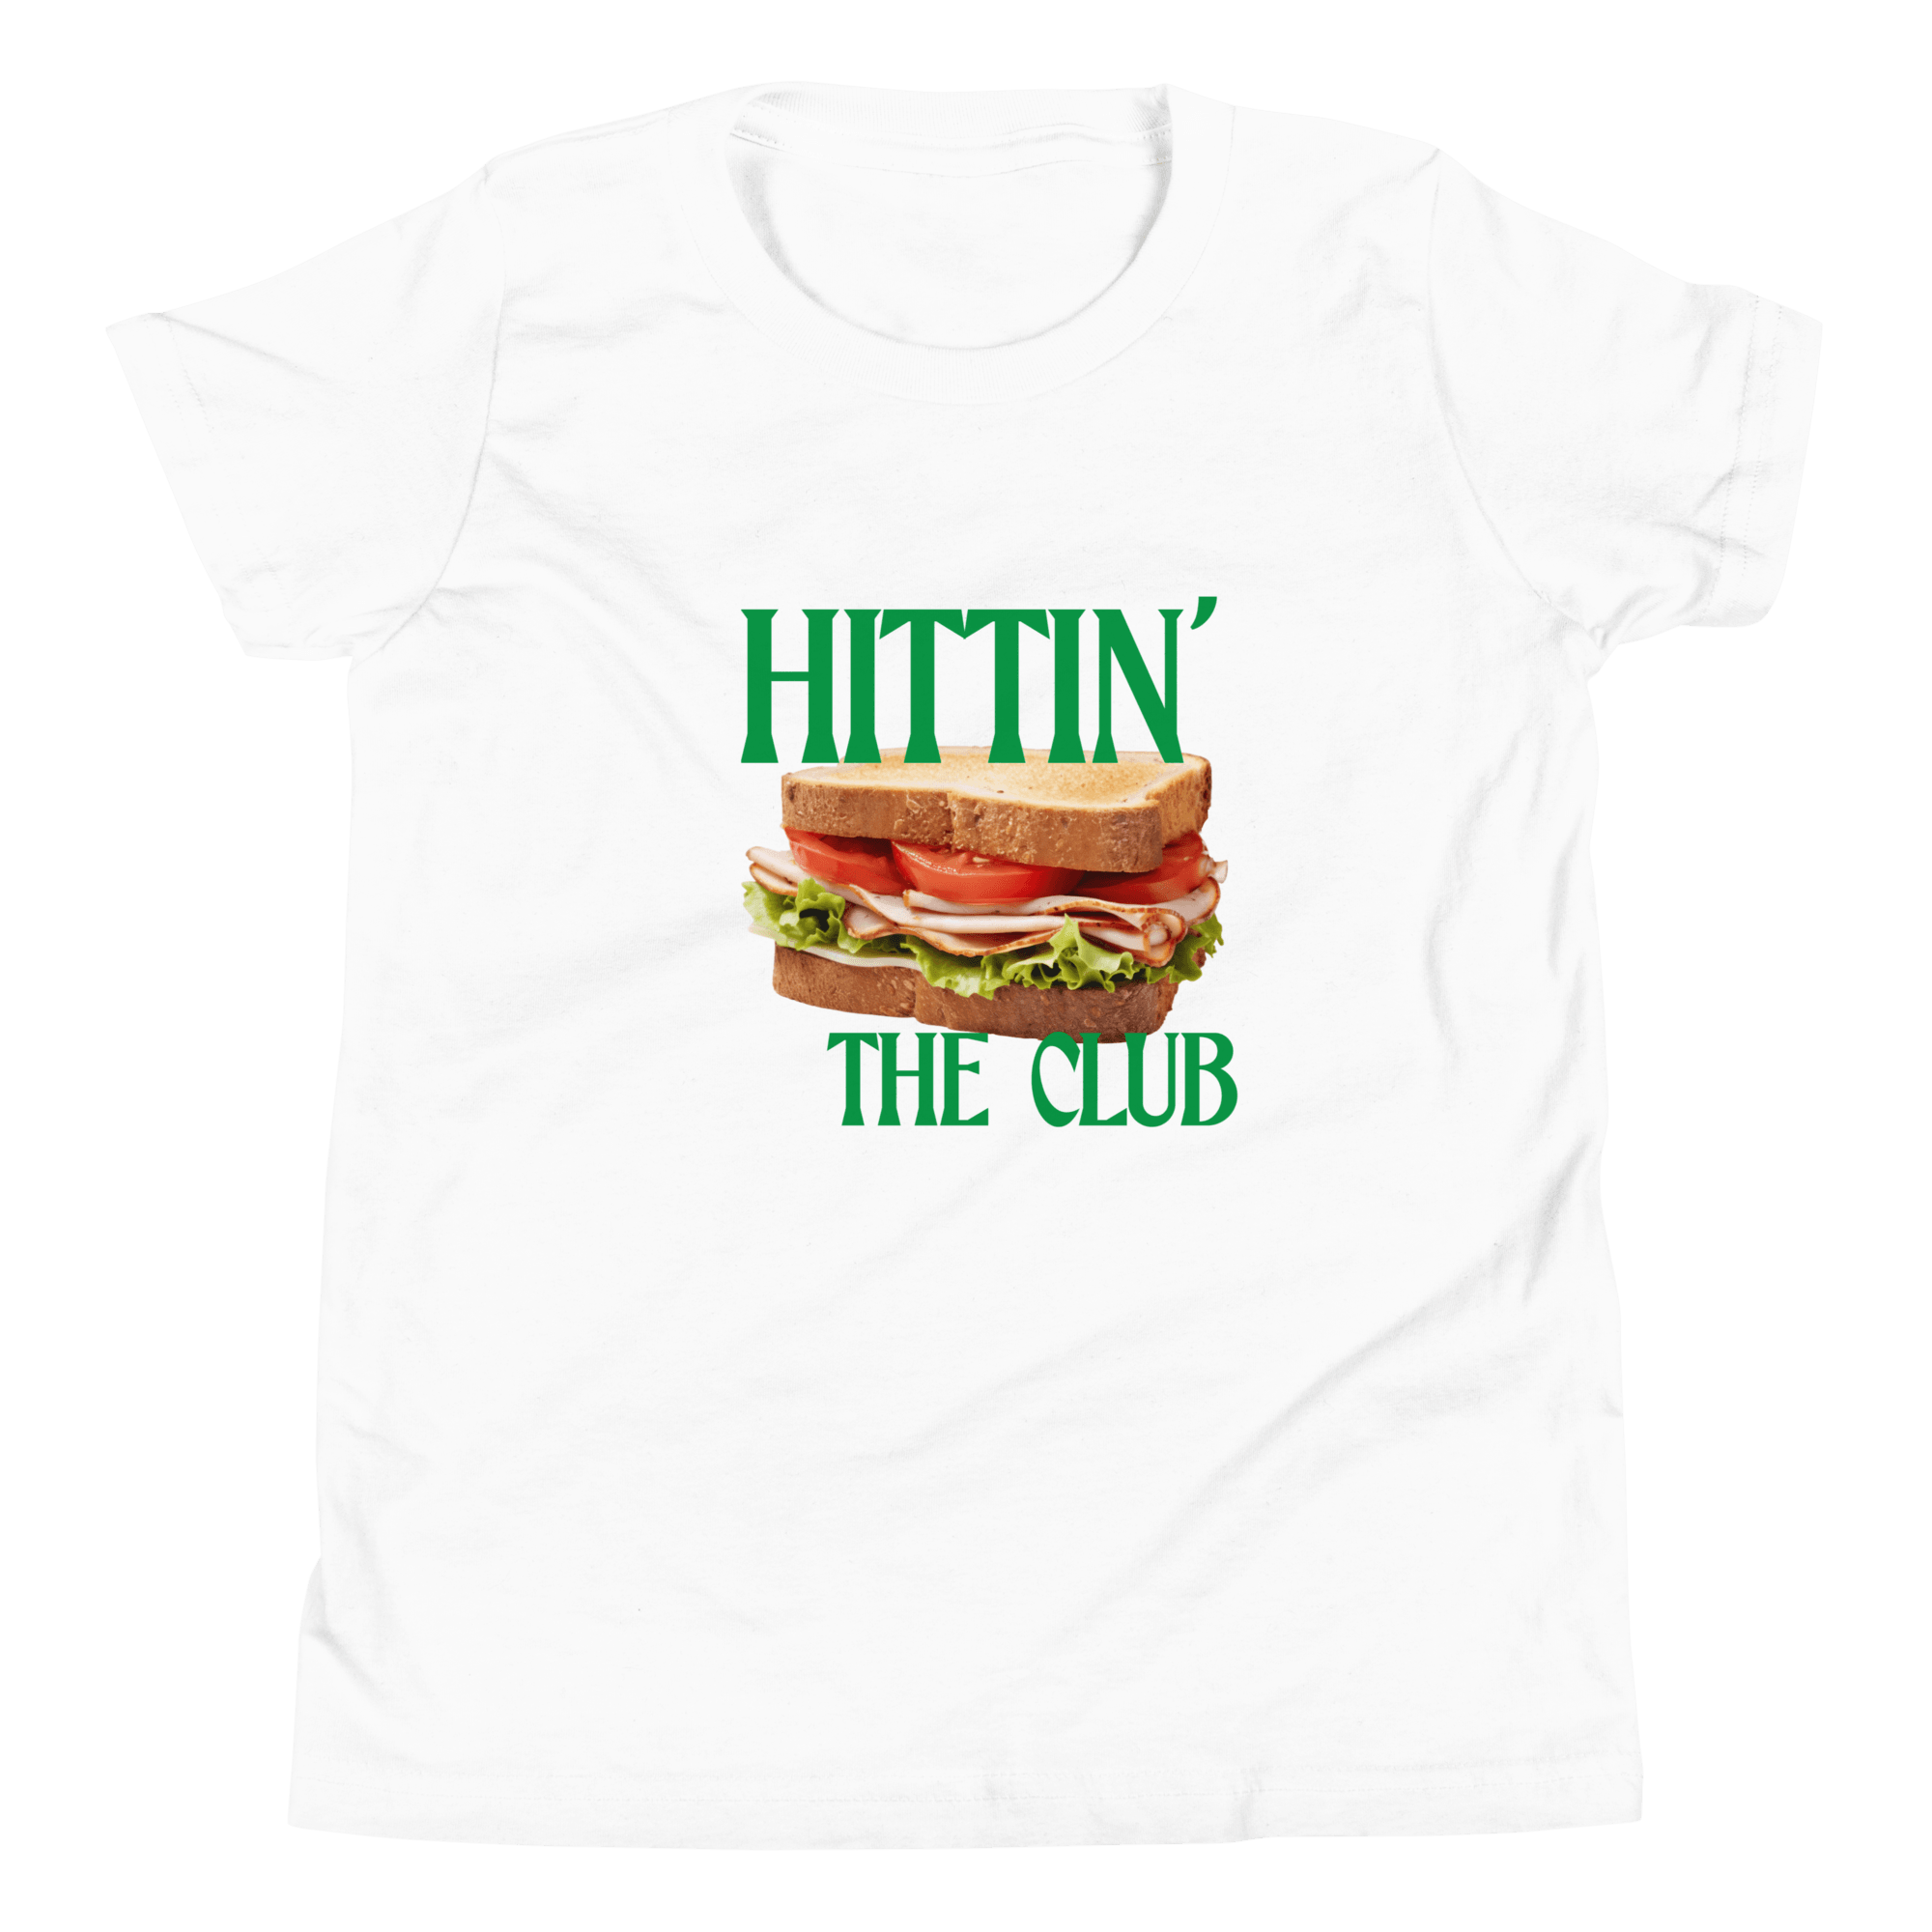 Hittin' The Club Youth T-Shirt Polychrome Goods 🍊